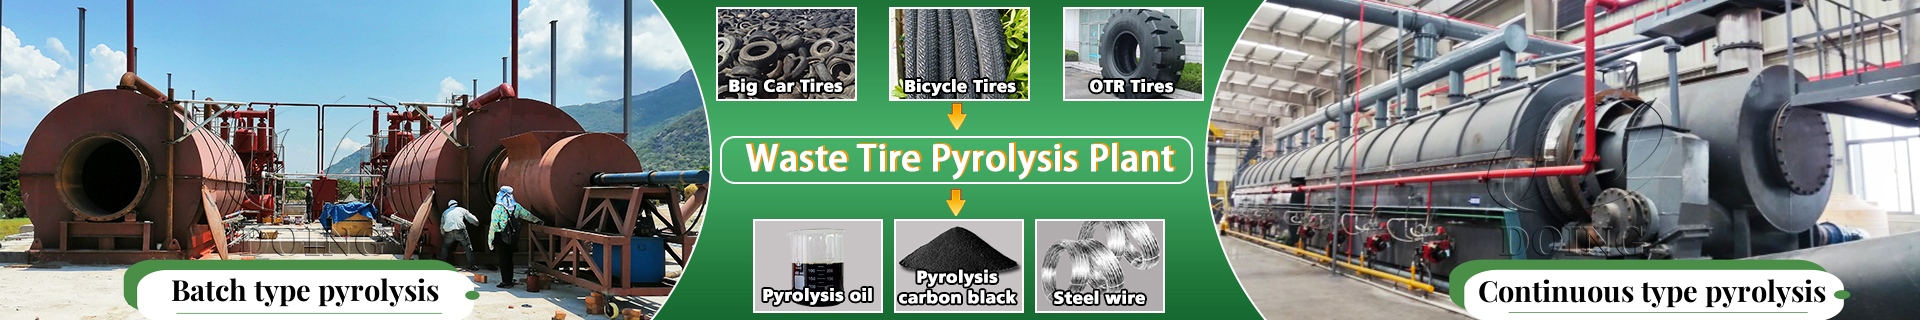 Waste Tire Pyrolysis Plant